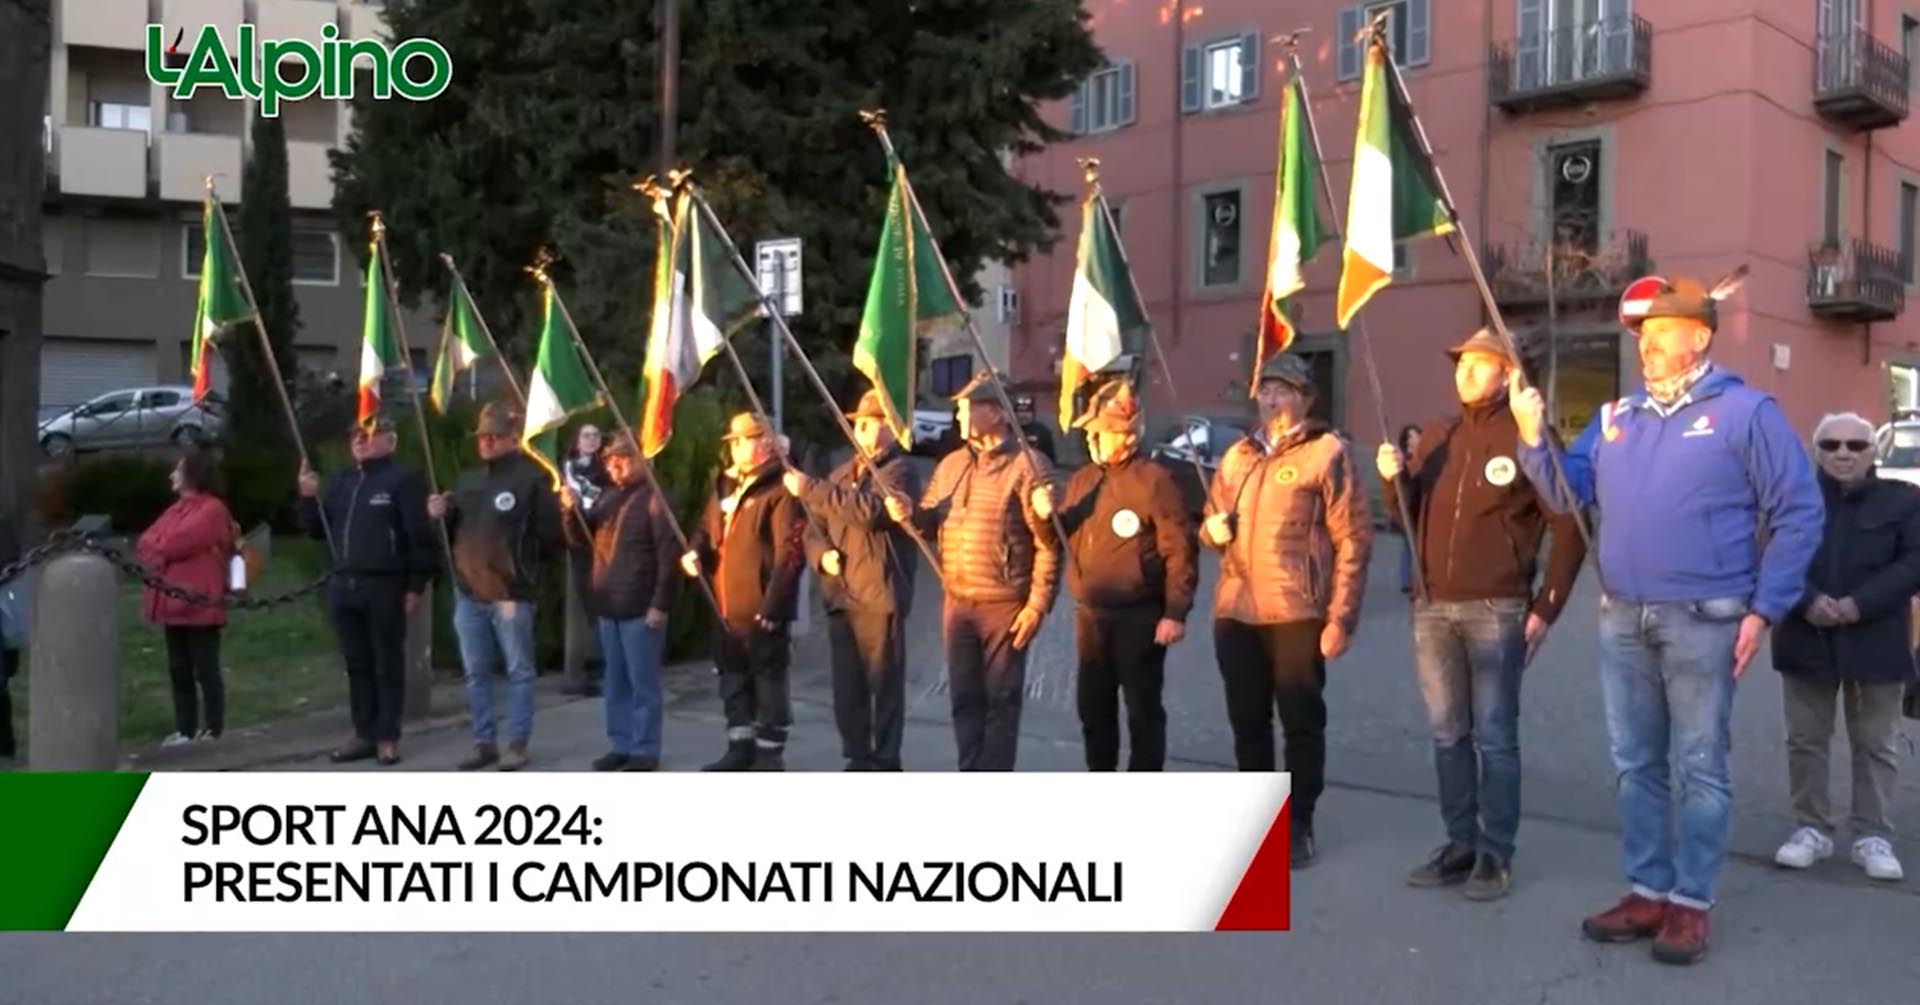 L'Alpino - Sport ANA 2024, presentati i campionati nazionali